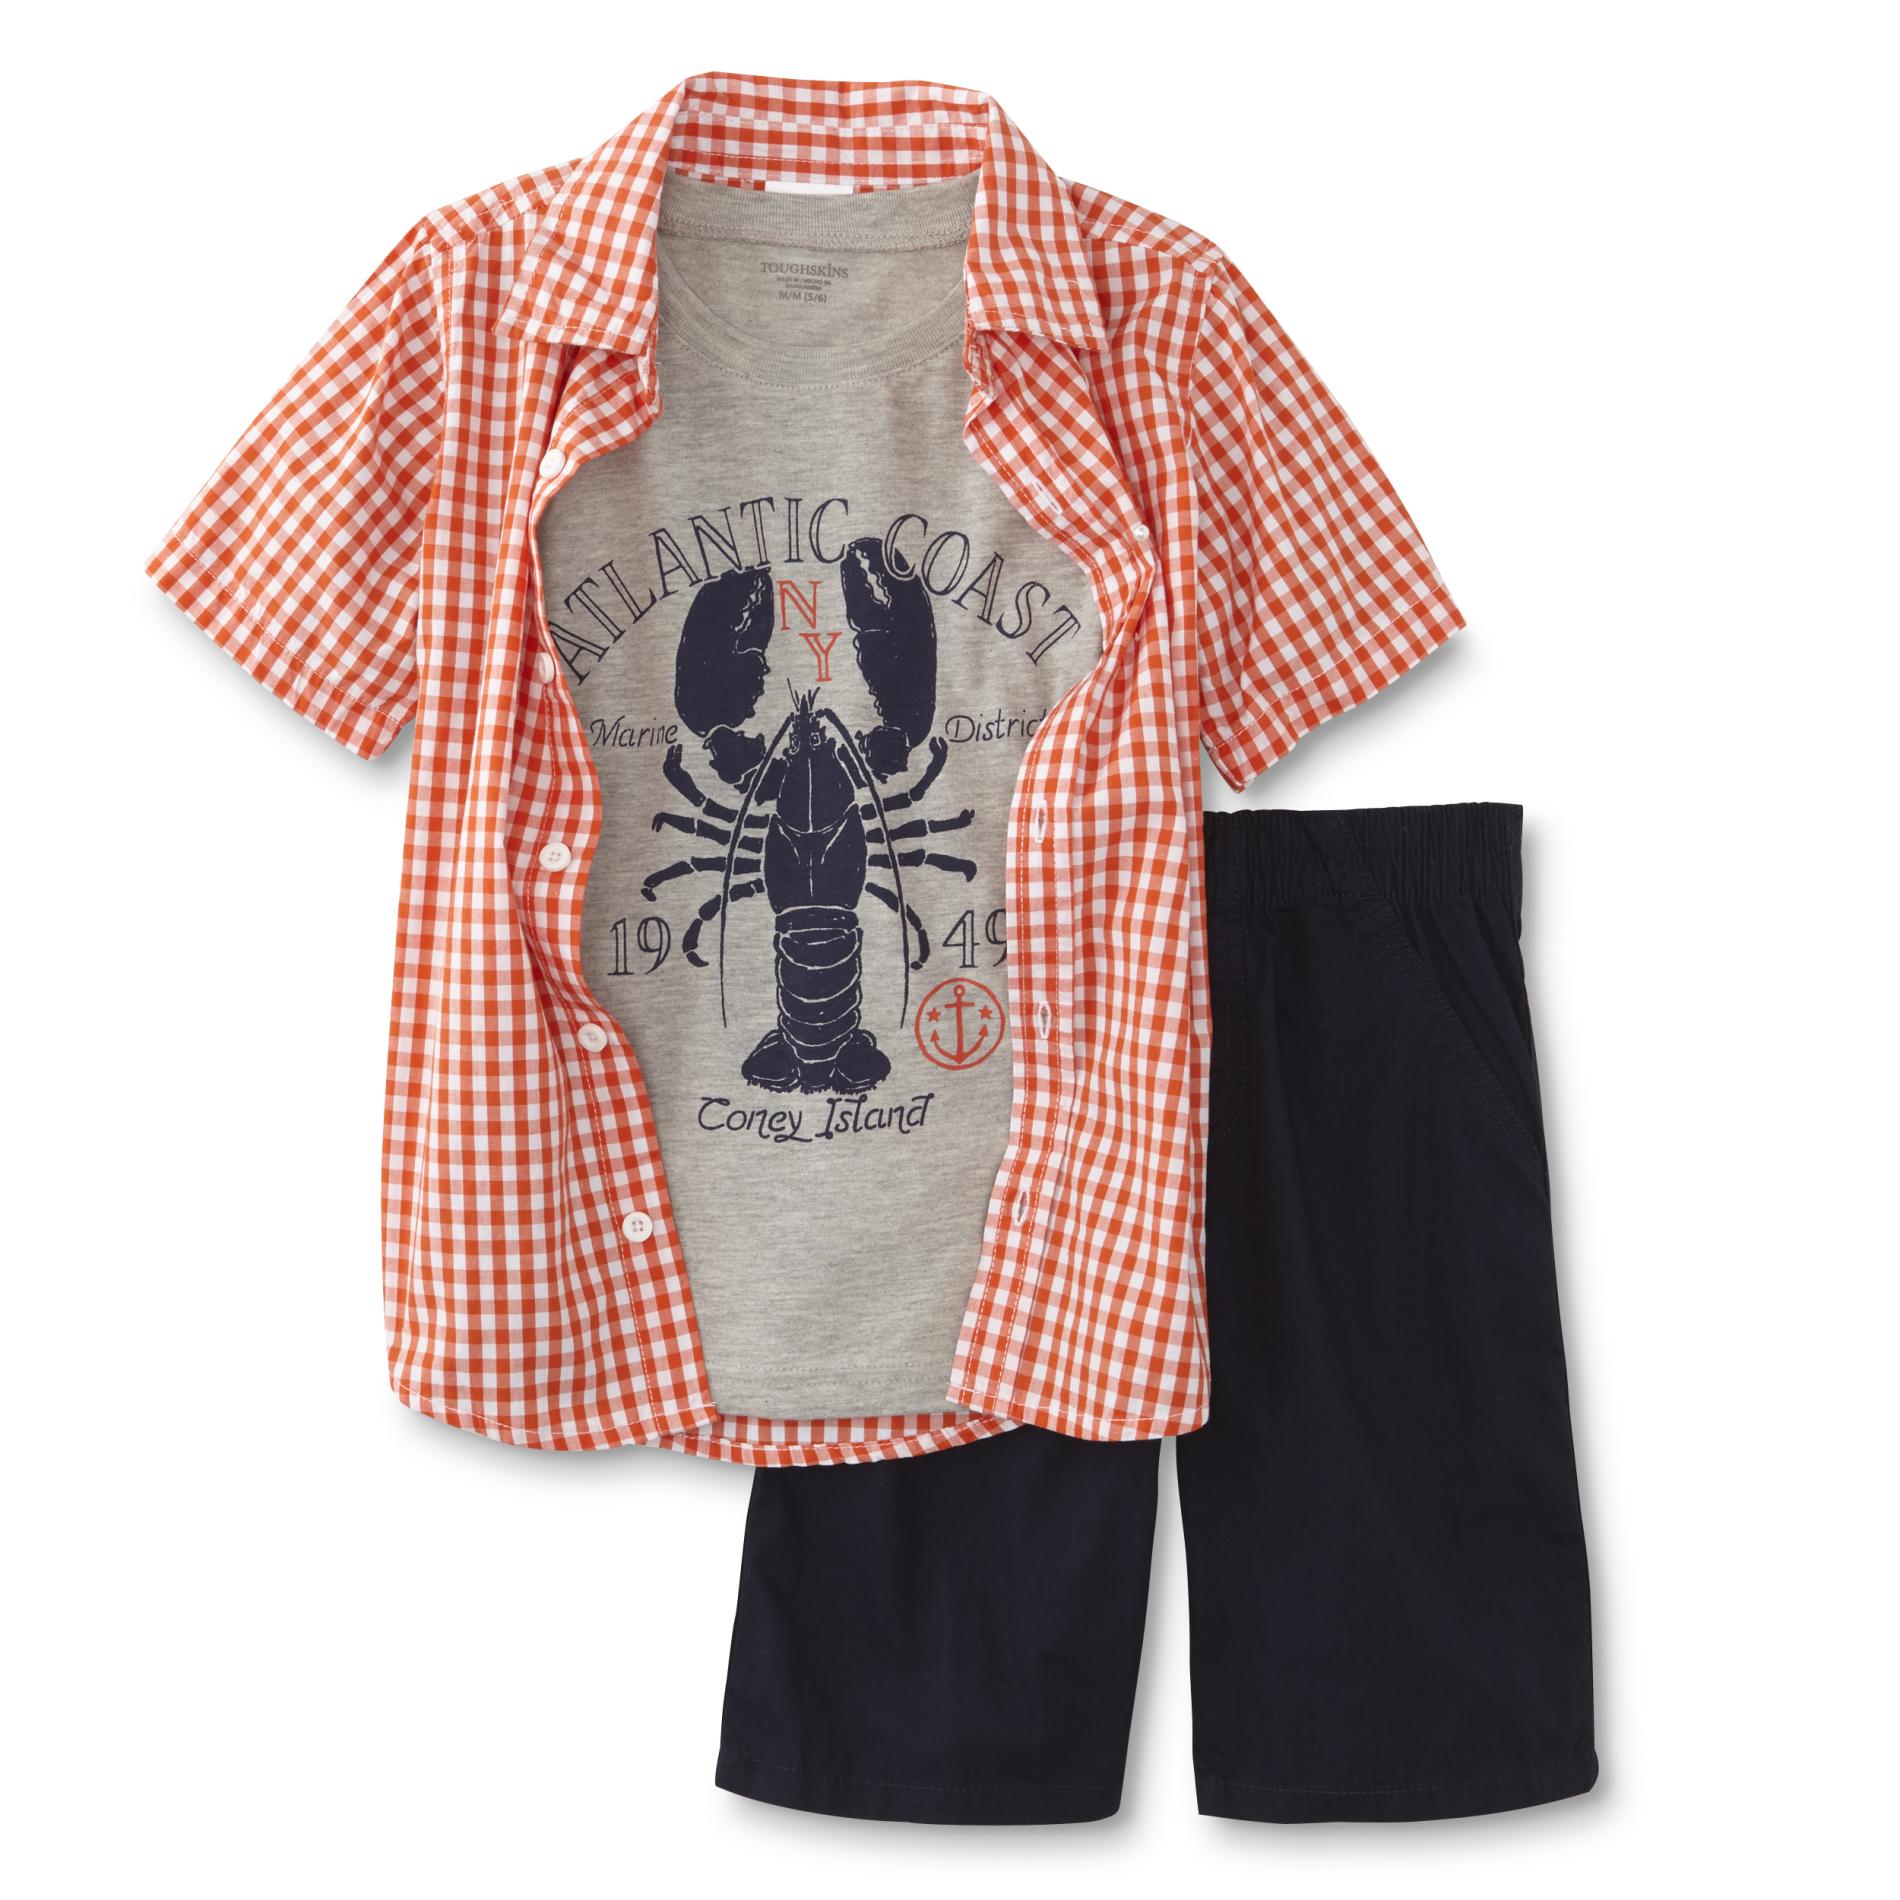 Toughskins Infant & Toddler Boys' Button-Front Shirt, T-Shirt & Shorts - Lobster